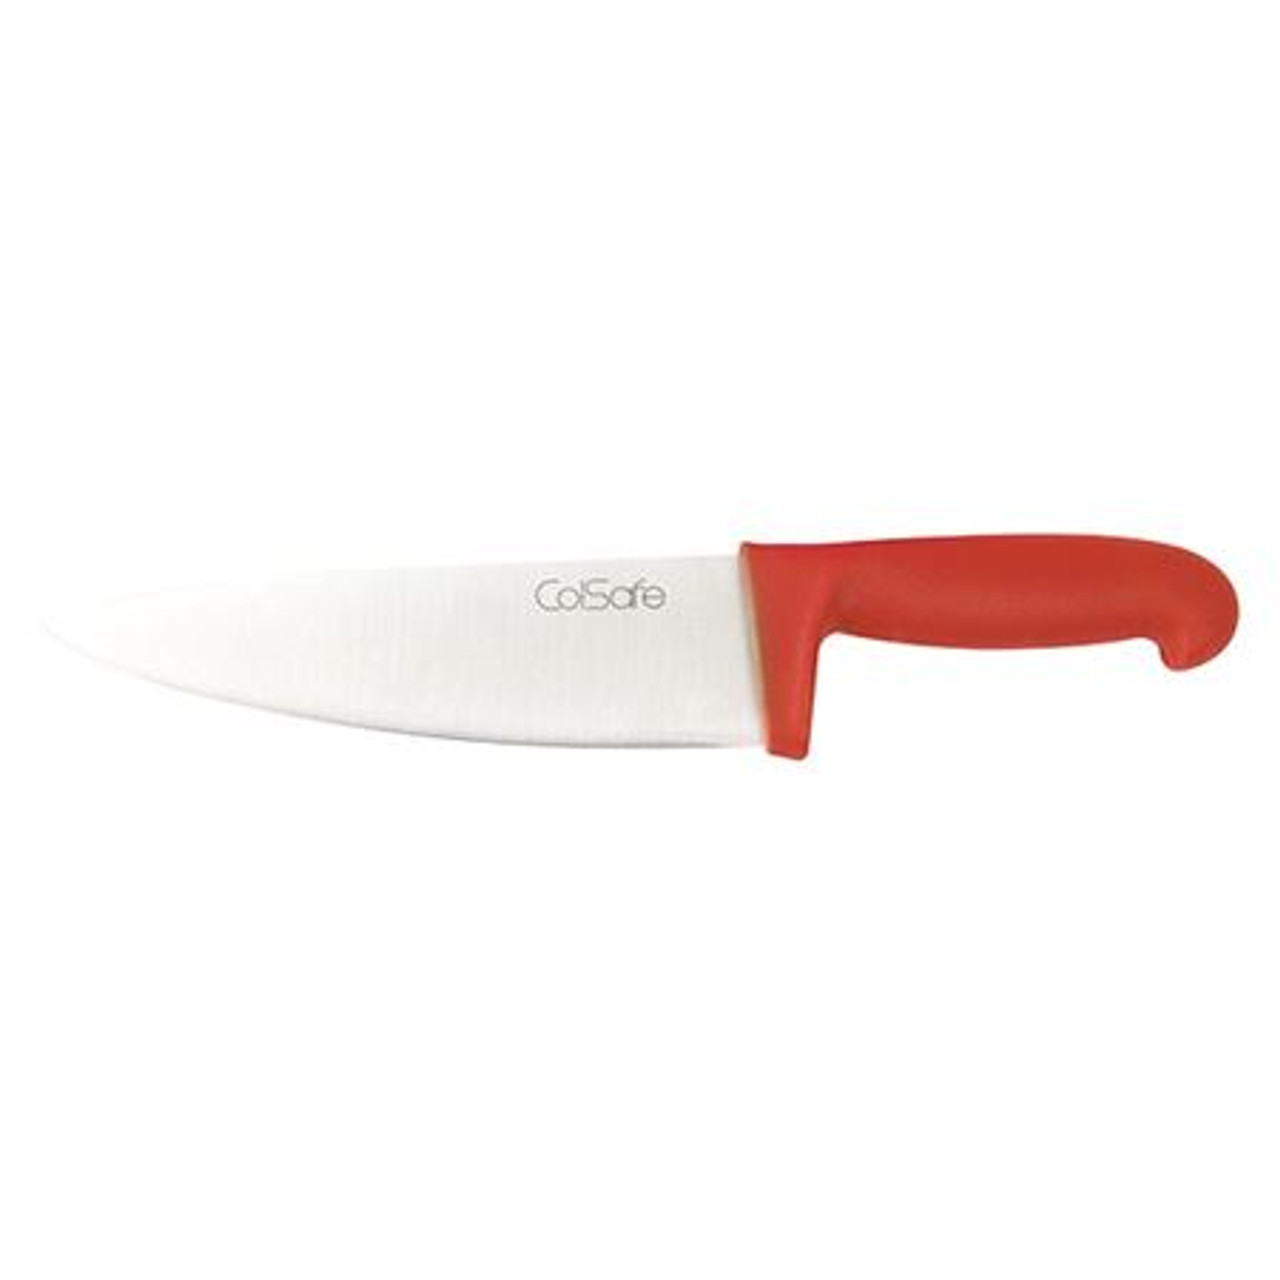 Colsafe Cooks Knife Red 8.5"